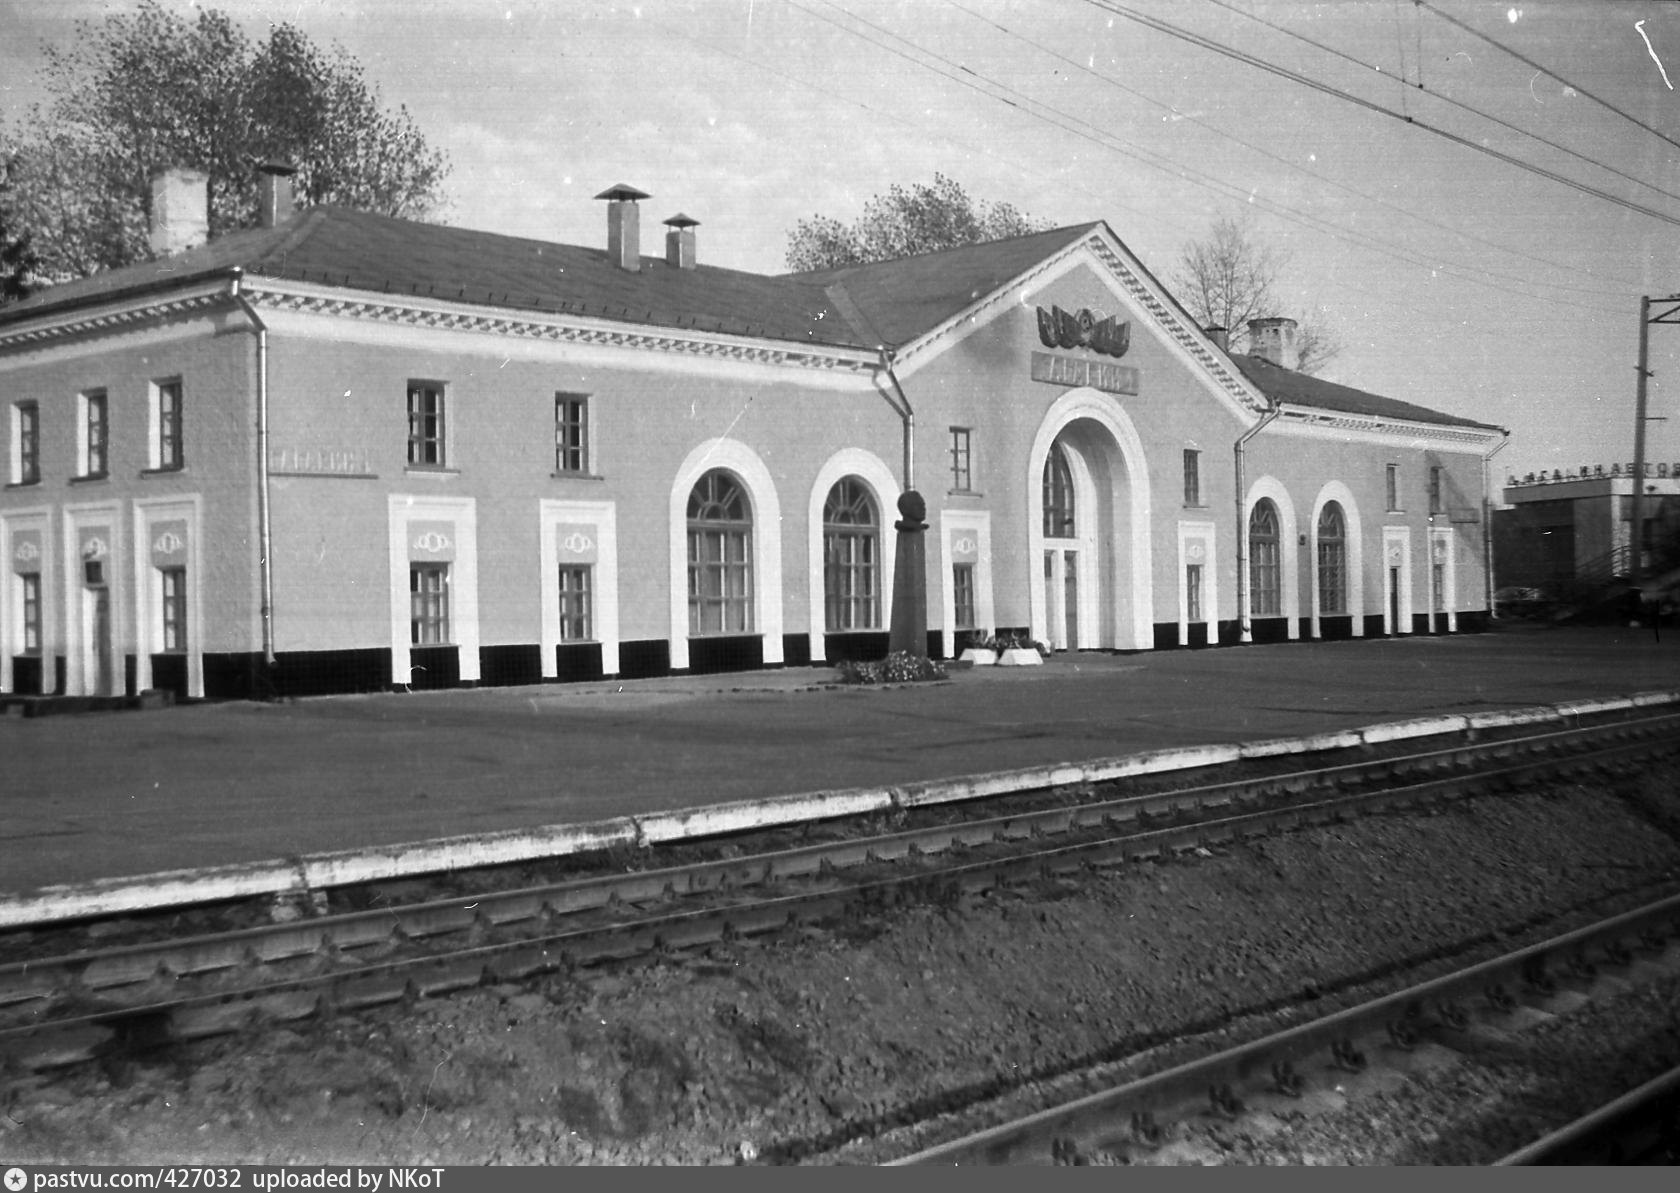 Гагарин вокзал